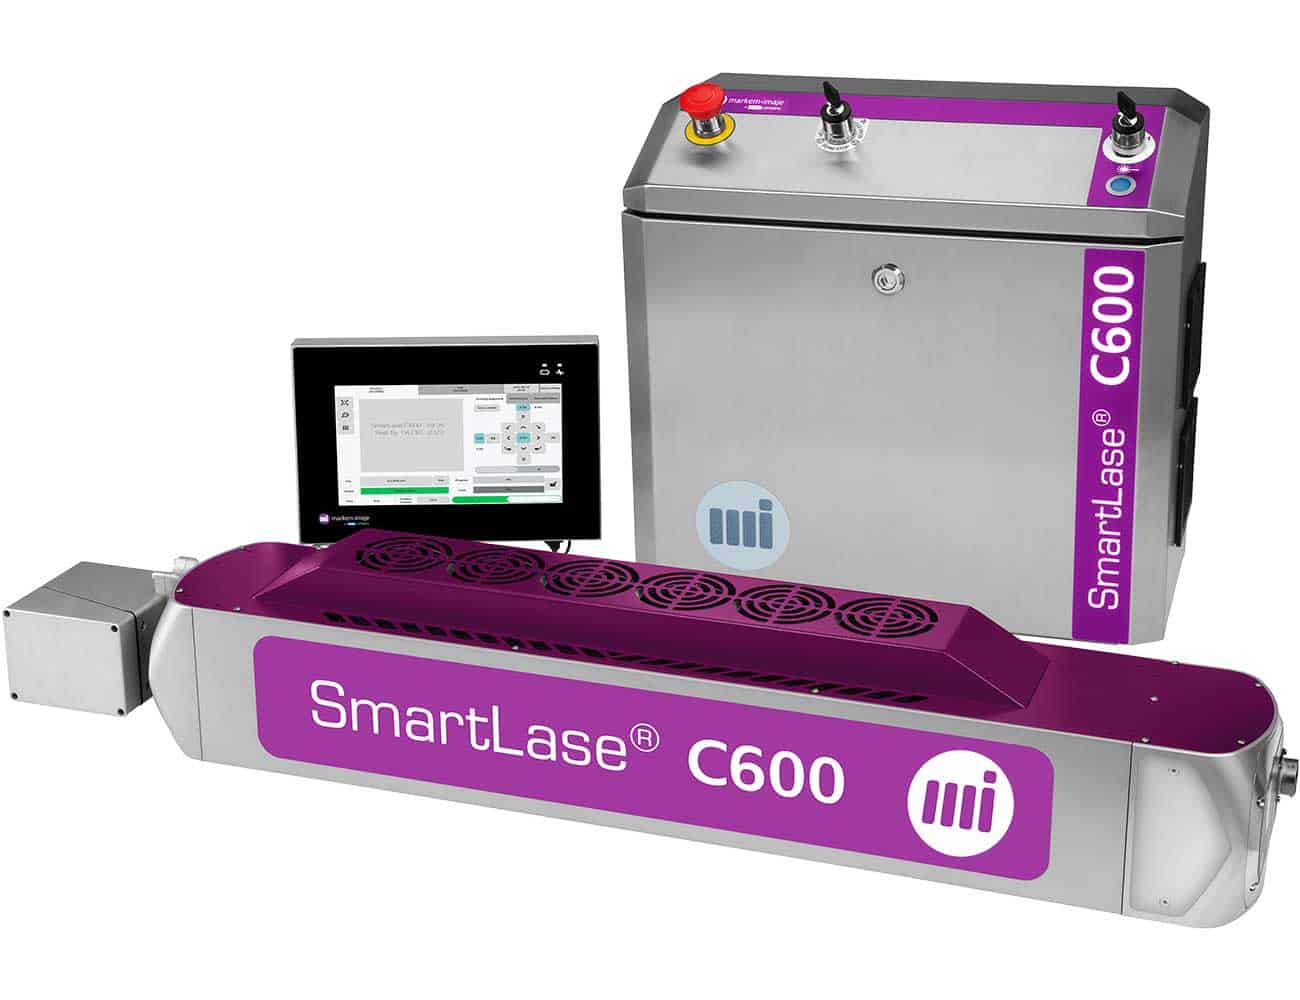 Smartlase c600 laser printer by Markem-Imaje, Markem-Imaje Smartlase C600, C600 laser printer